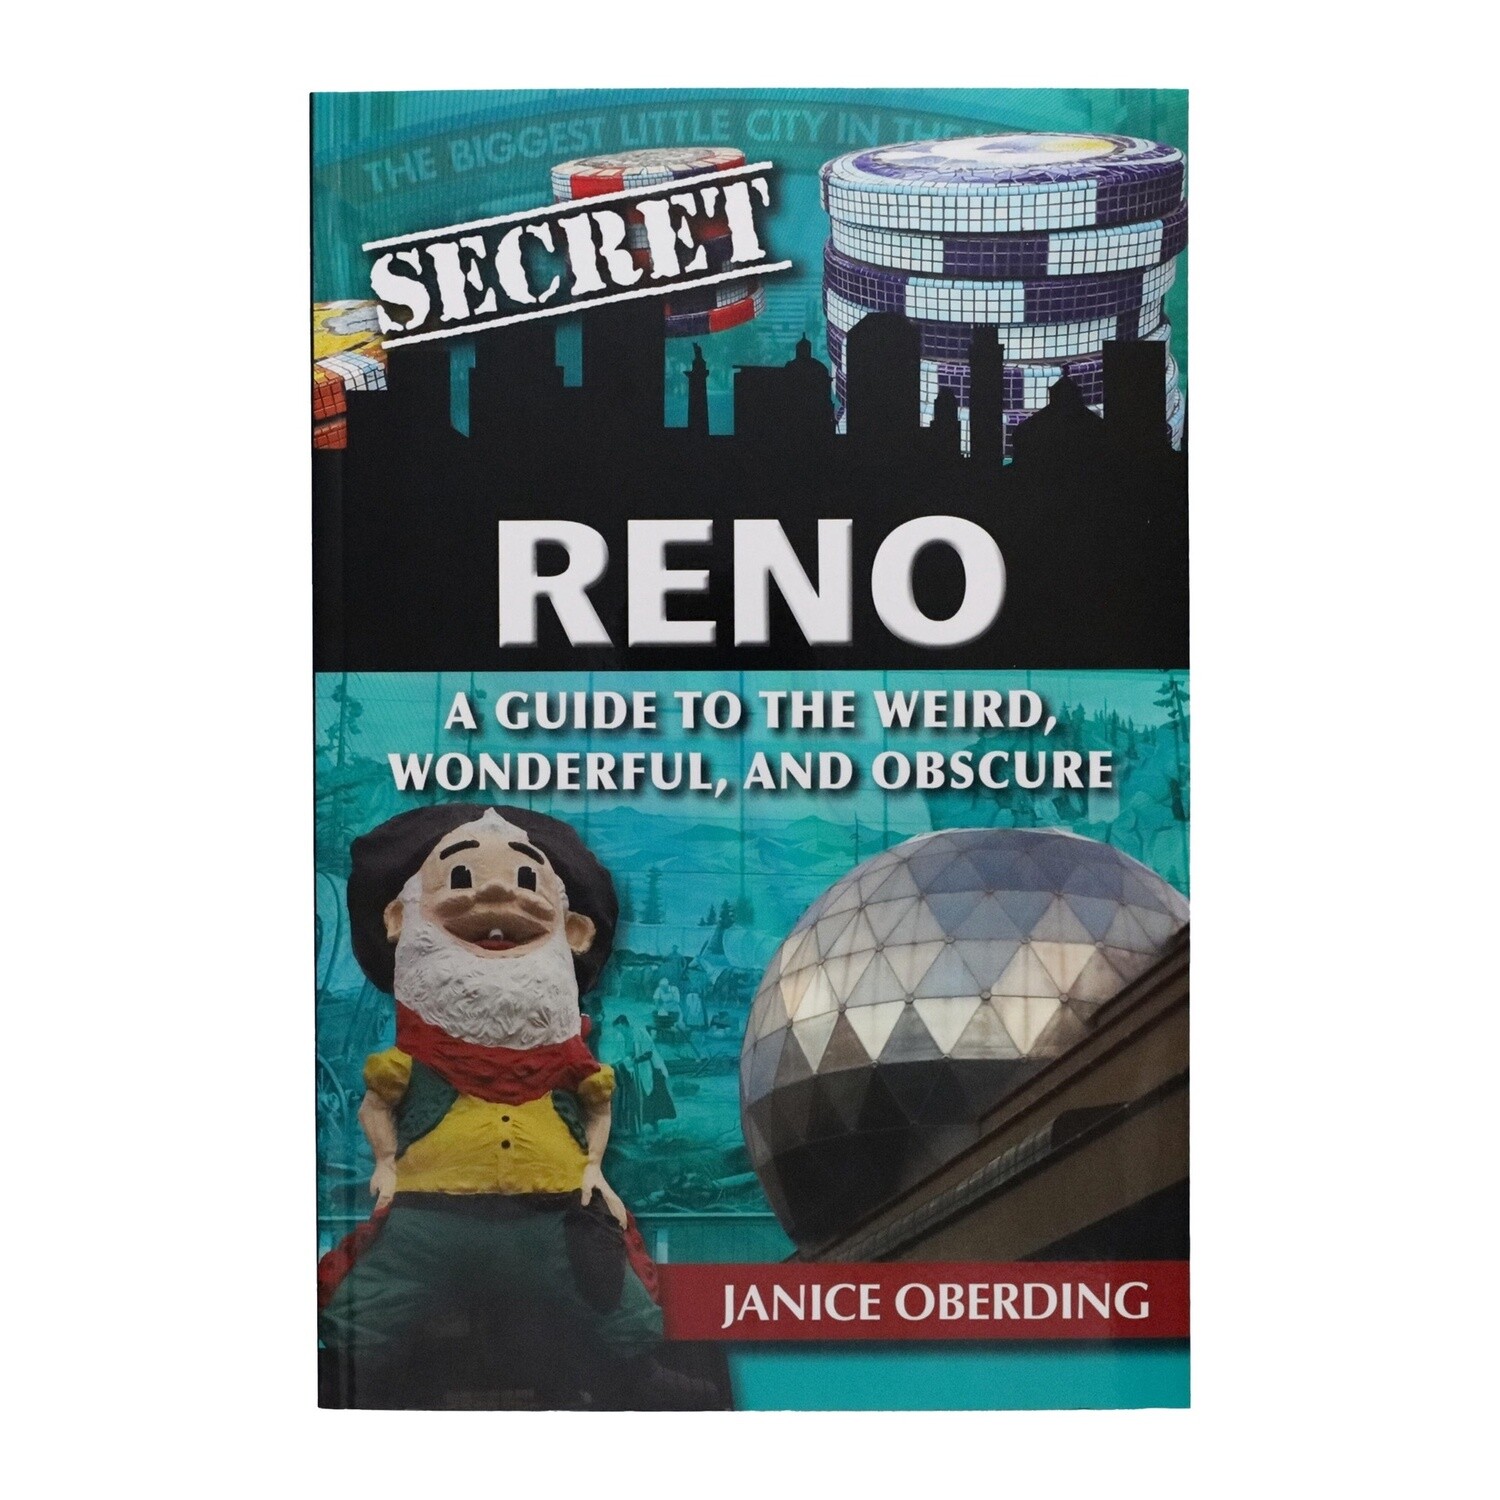 Secret Reno by Janice Oberding